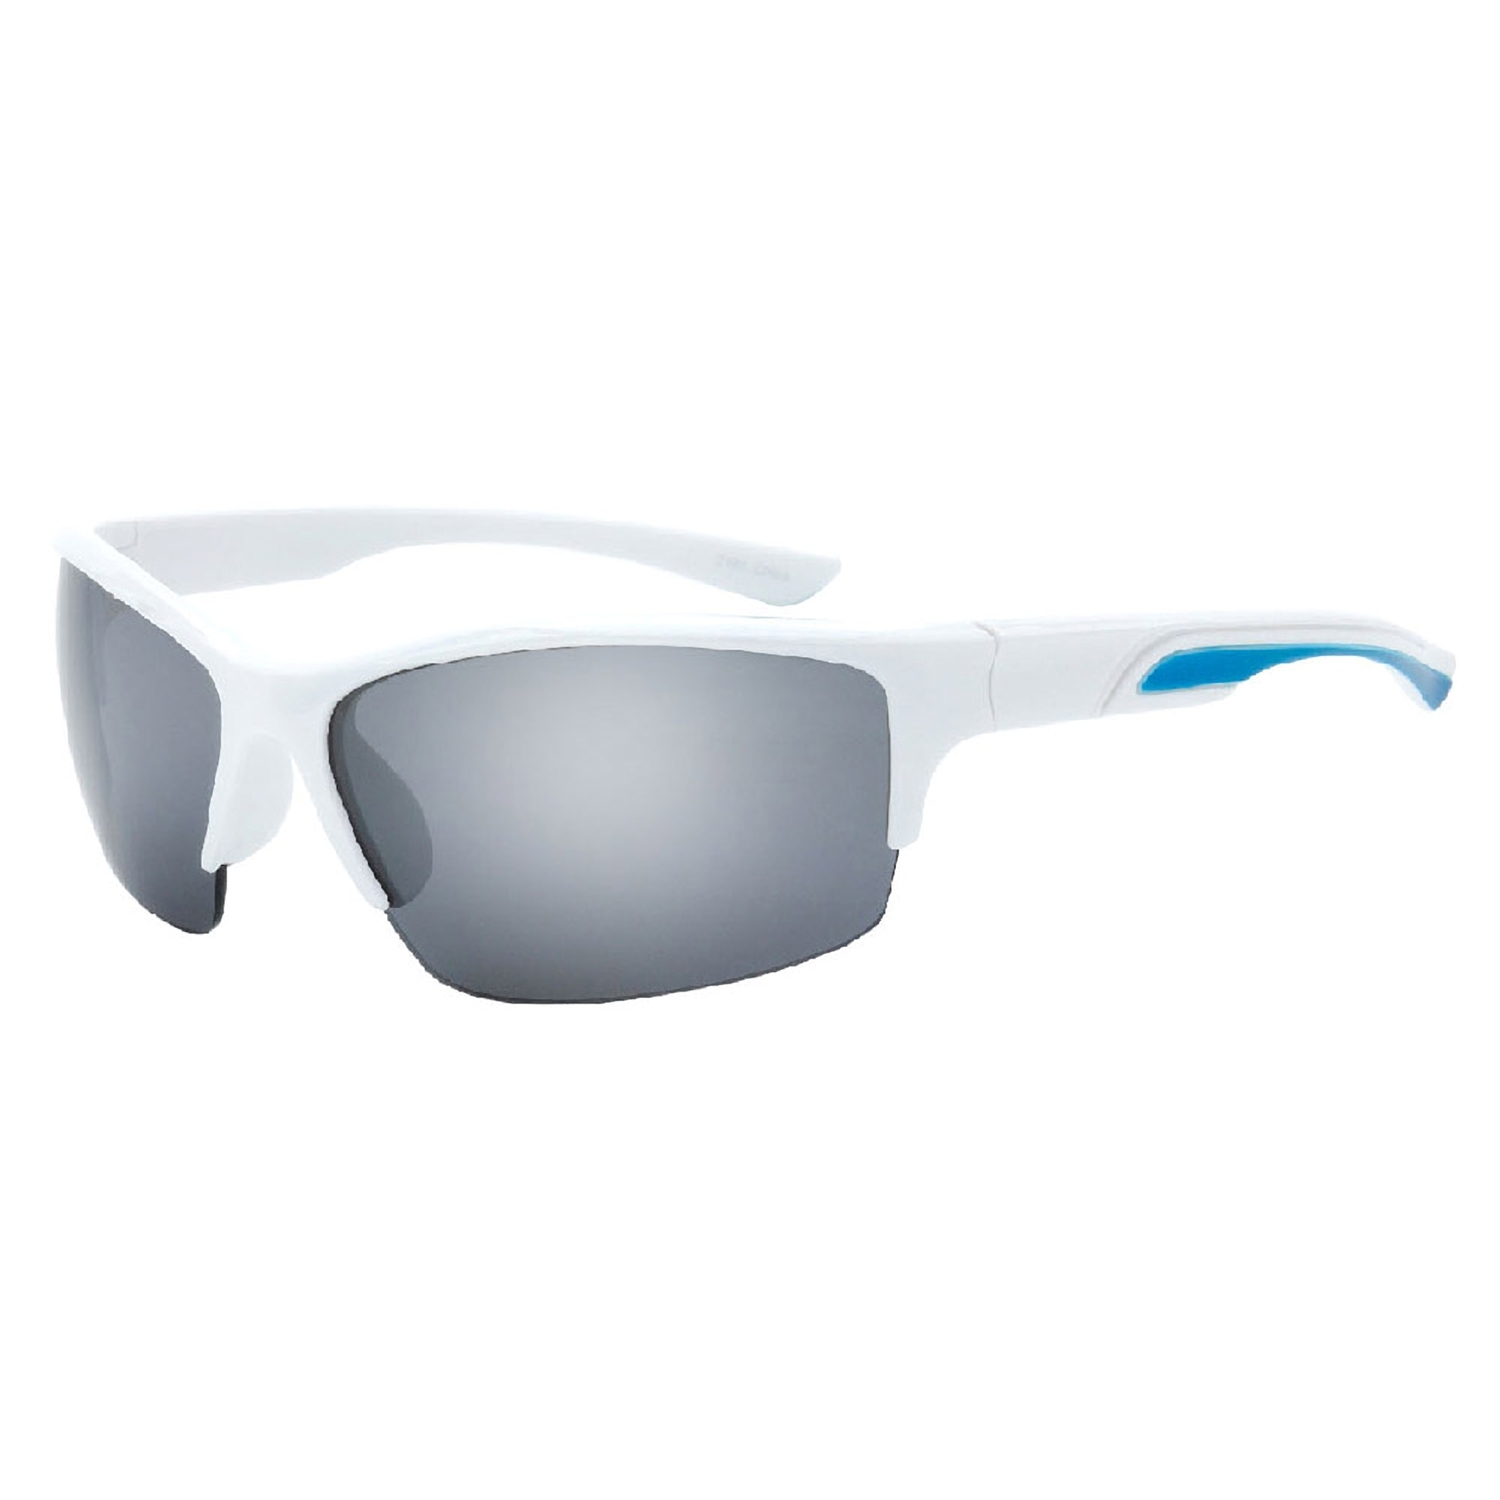 MLC Eyewear Model 84 UV400 Light Weight Sport Frame Sunglasses - image 2 of 2